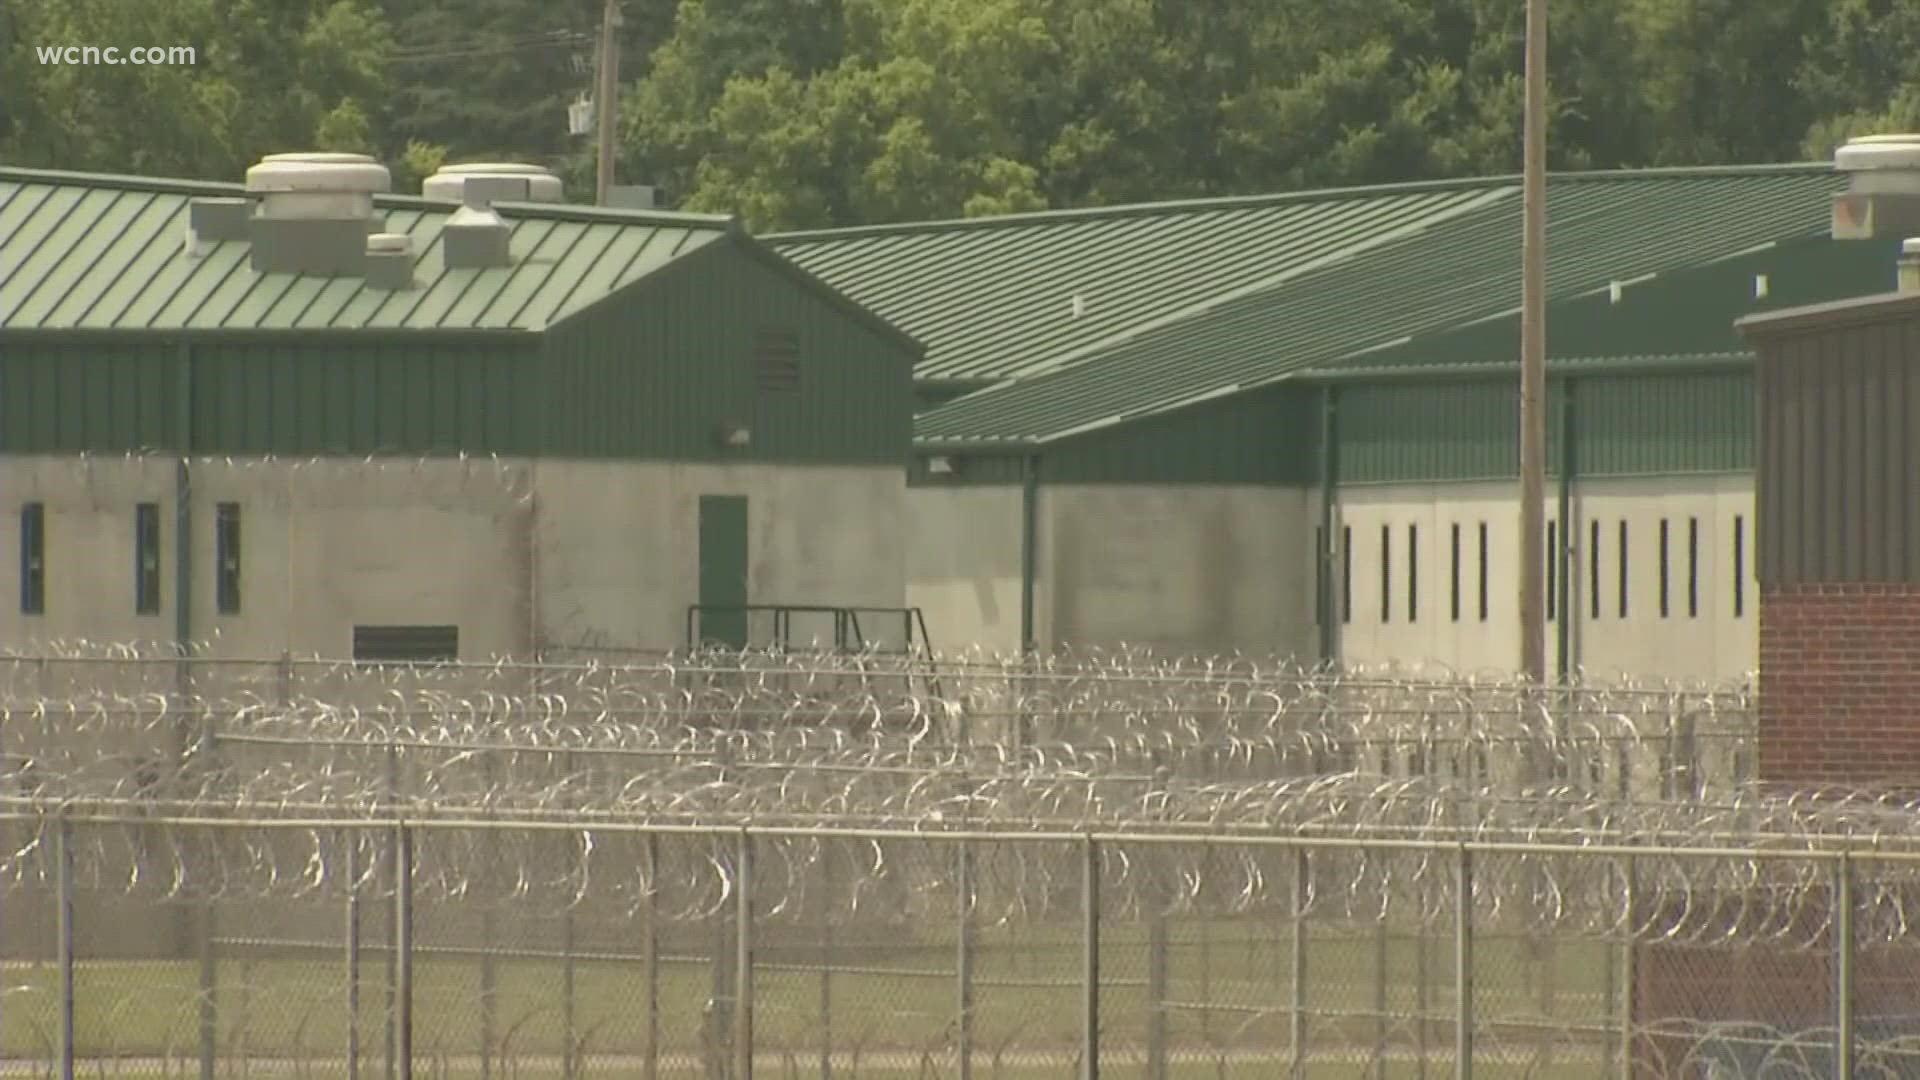 Nearly 100 million dollars will soon go towards improving prisons across South Carolina.